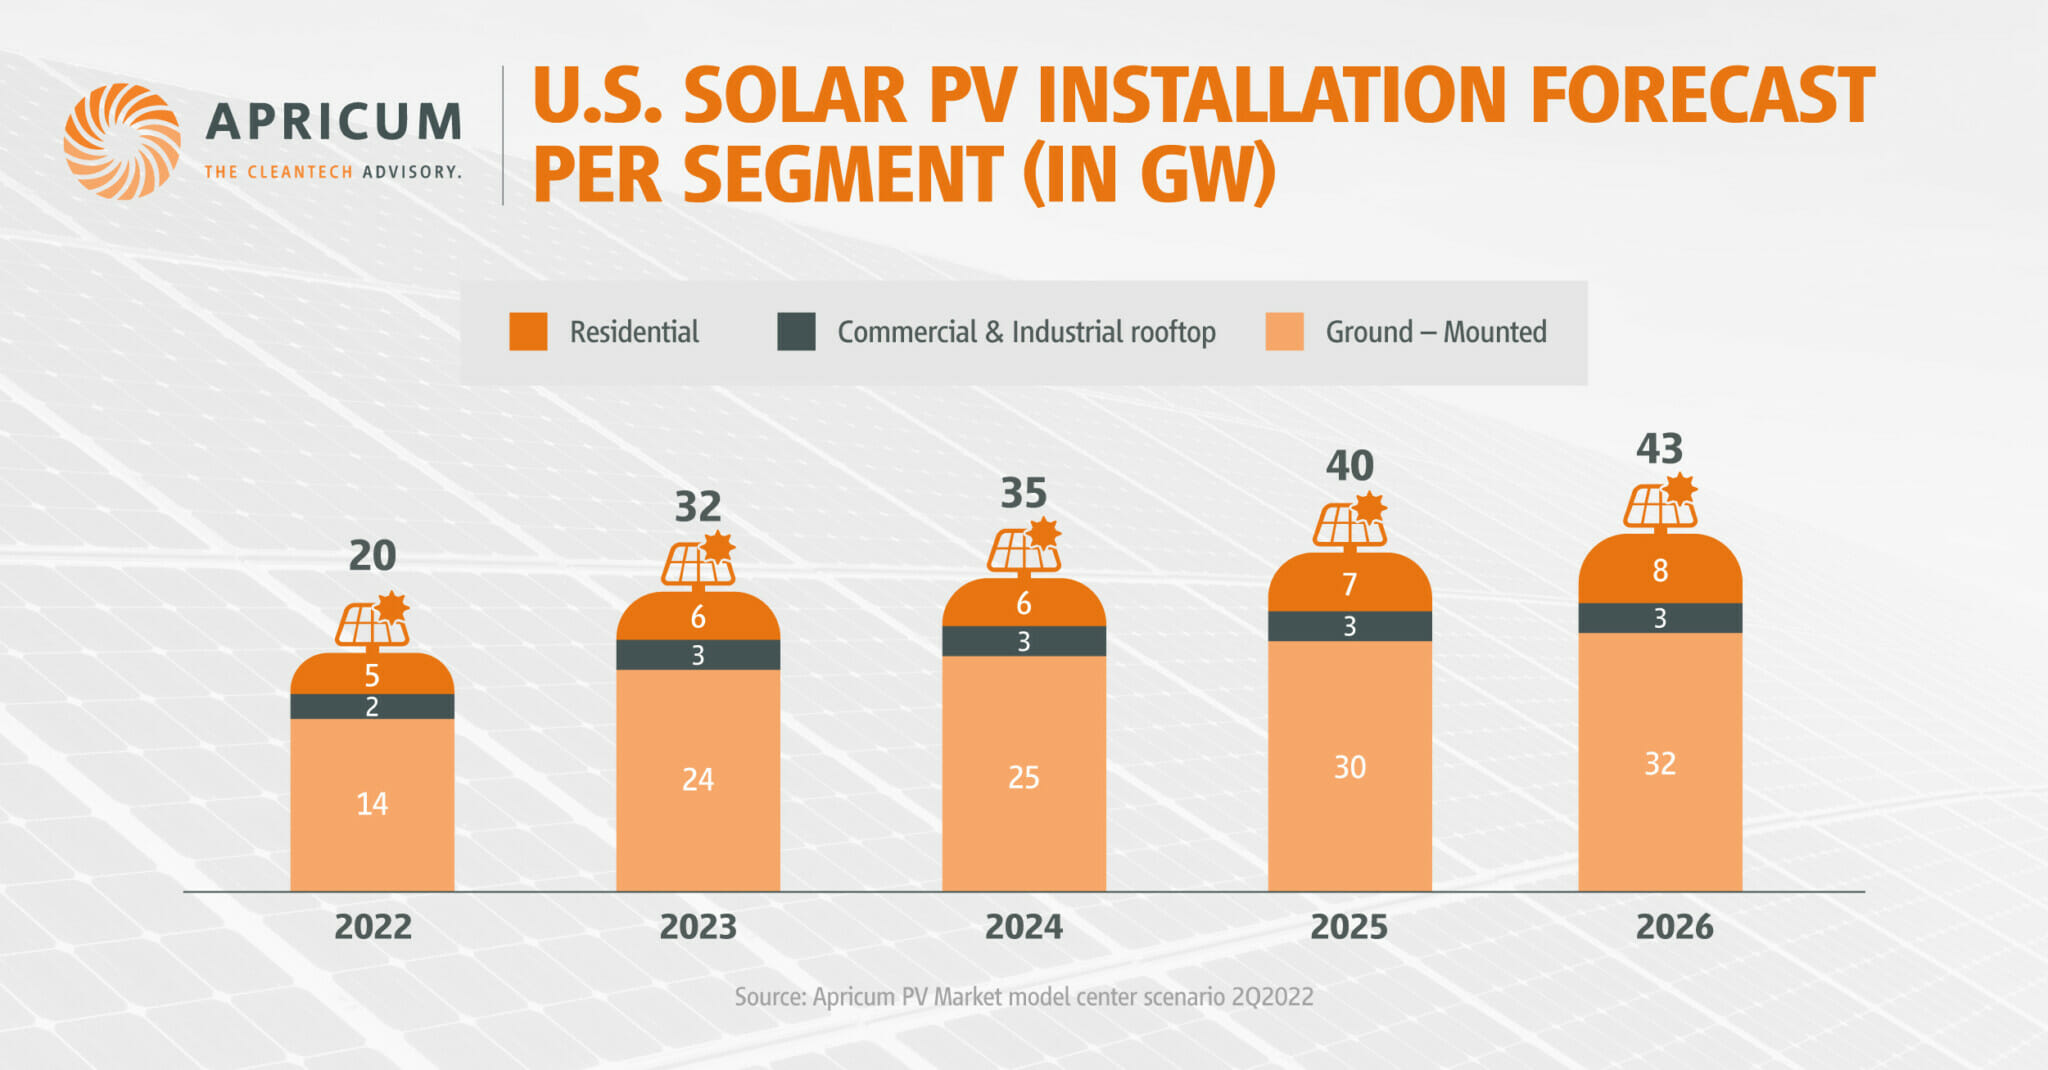 U.S. solar PV installation forecast per segment. Source: Apricum PV market model center scenario 2Q2022